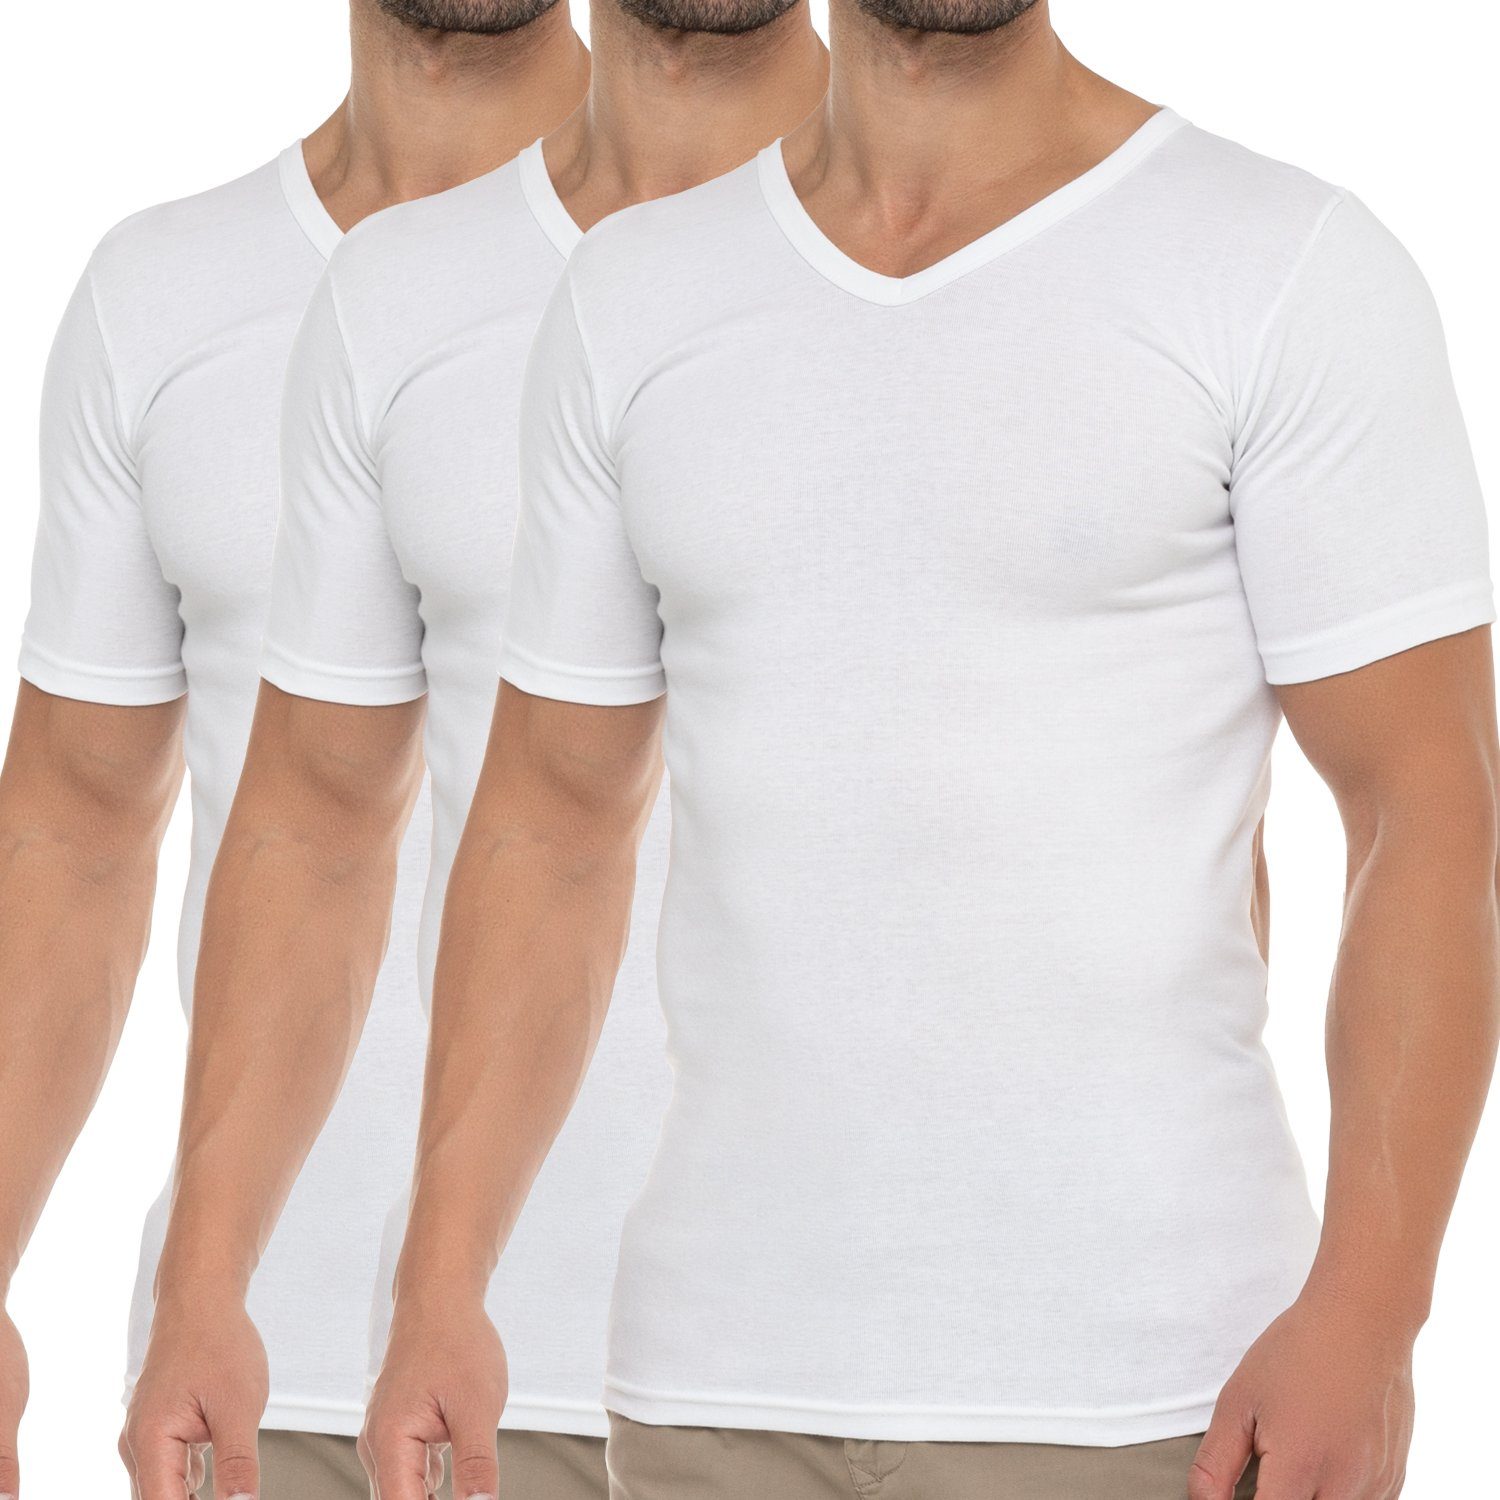 celodoro Kurzarmshirt Herren Business T-Shirt V-Neck Feinripp Baumwolle (1er/3er) Weiß